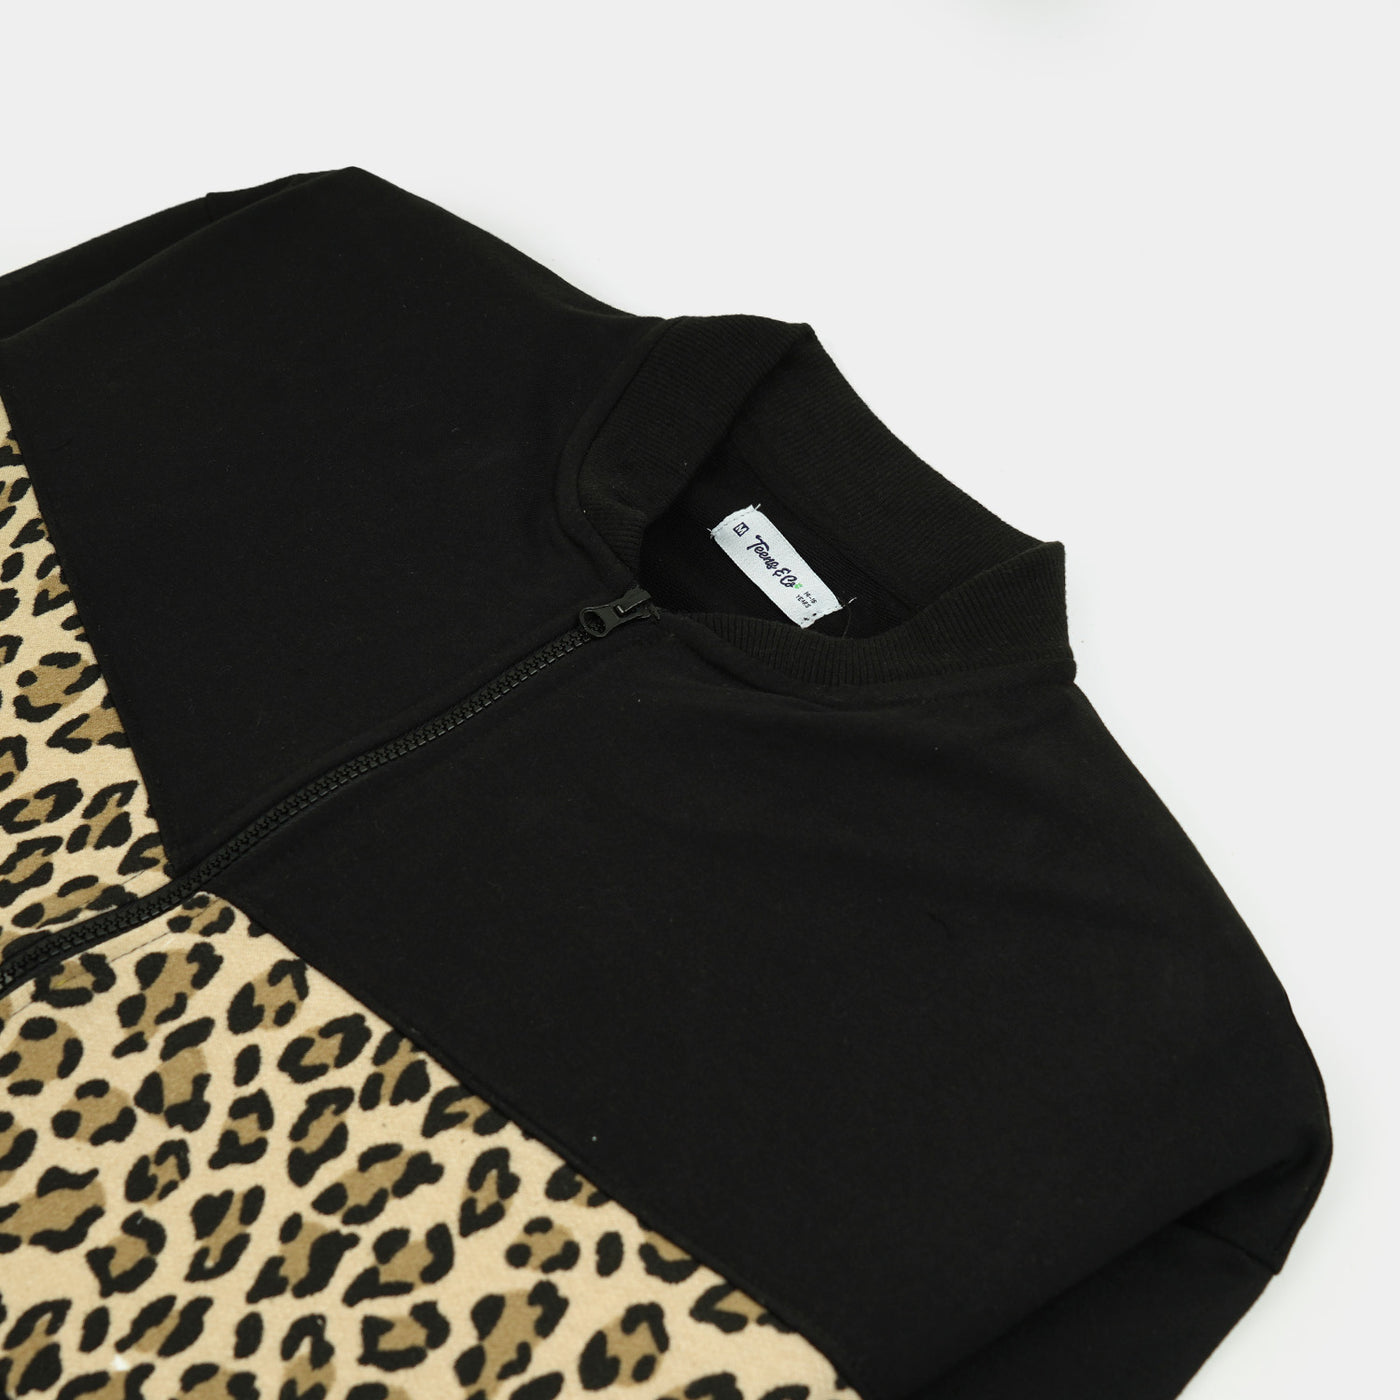 Girls Knitted Jacket Leopard - BLACK